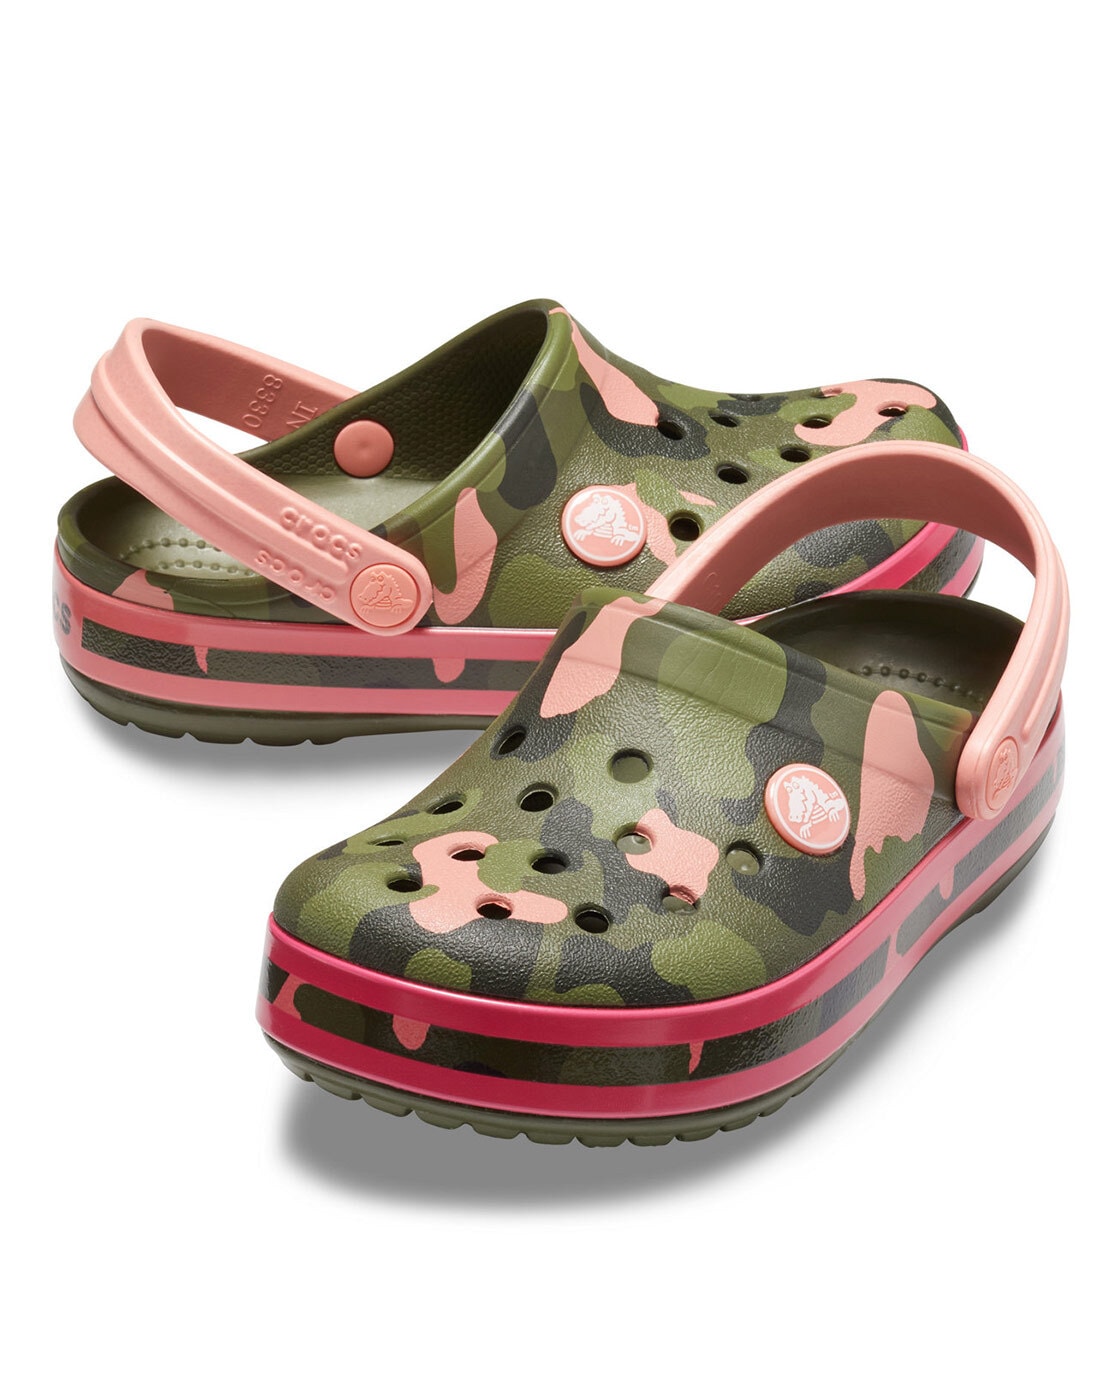 crocs camouflage pink